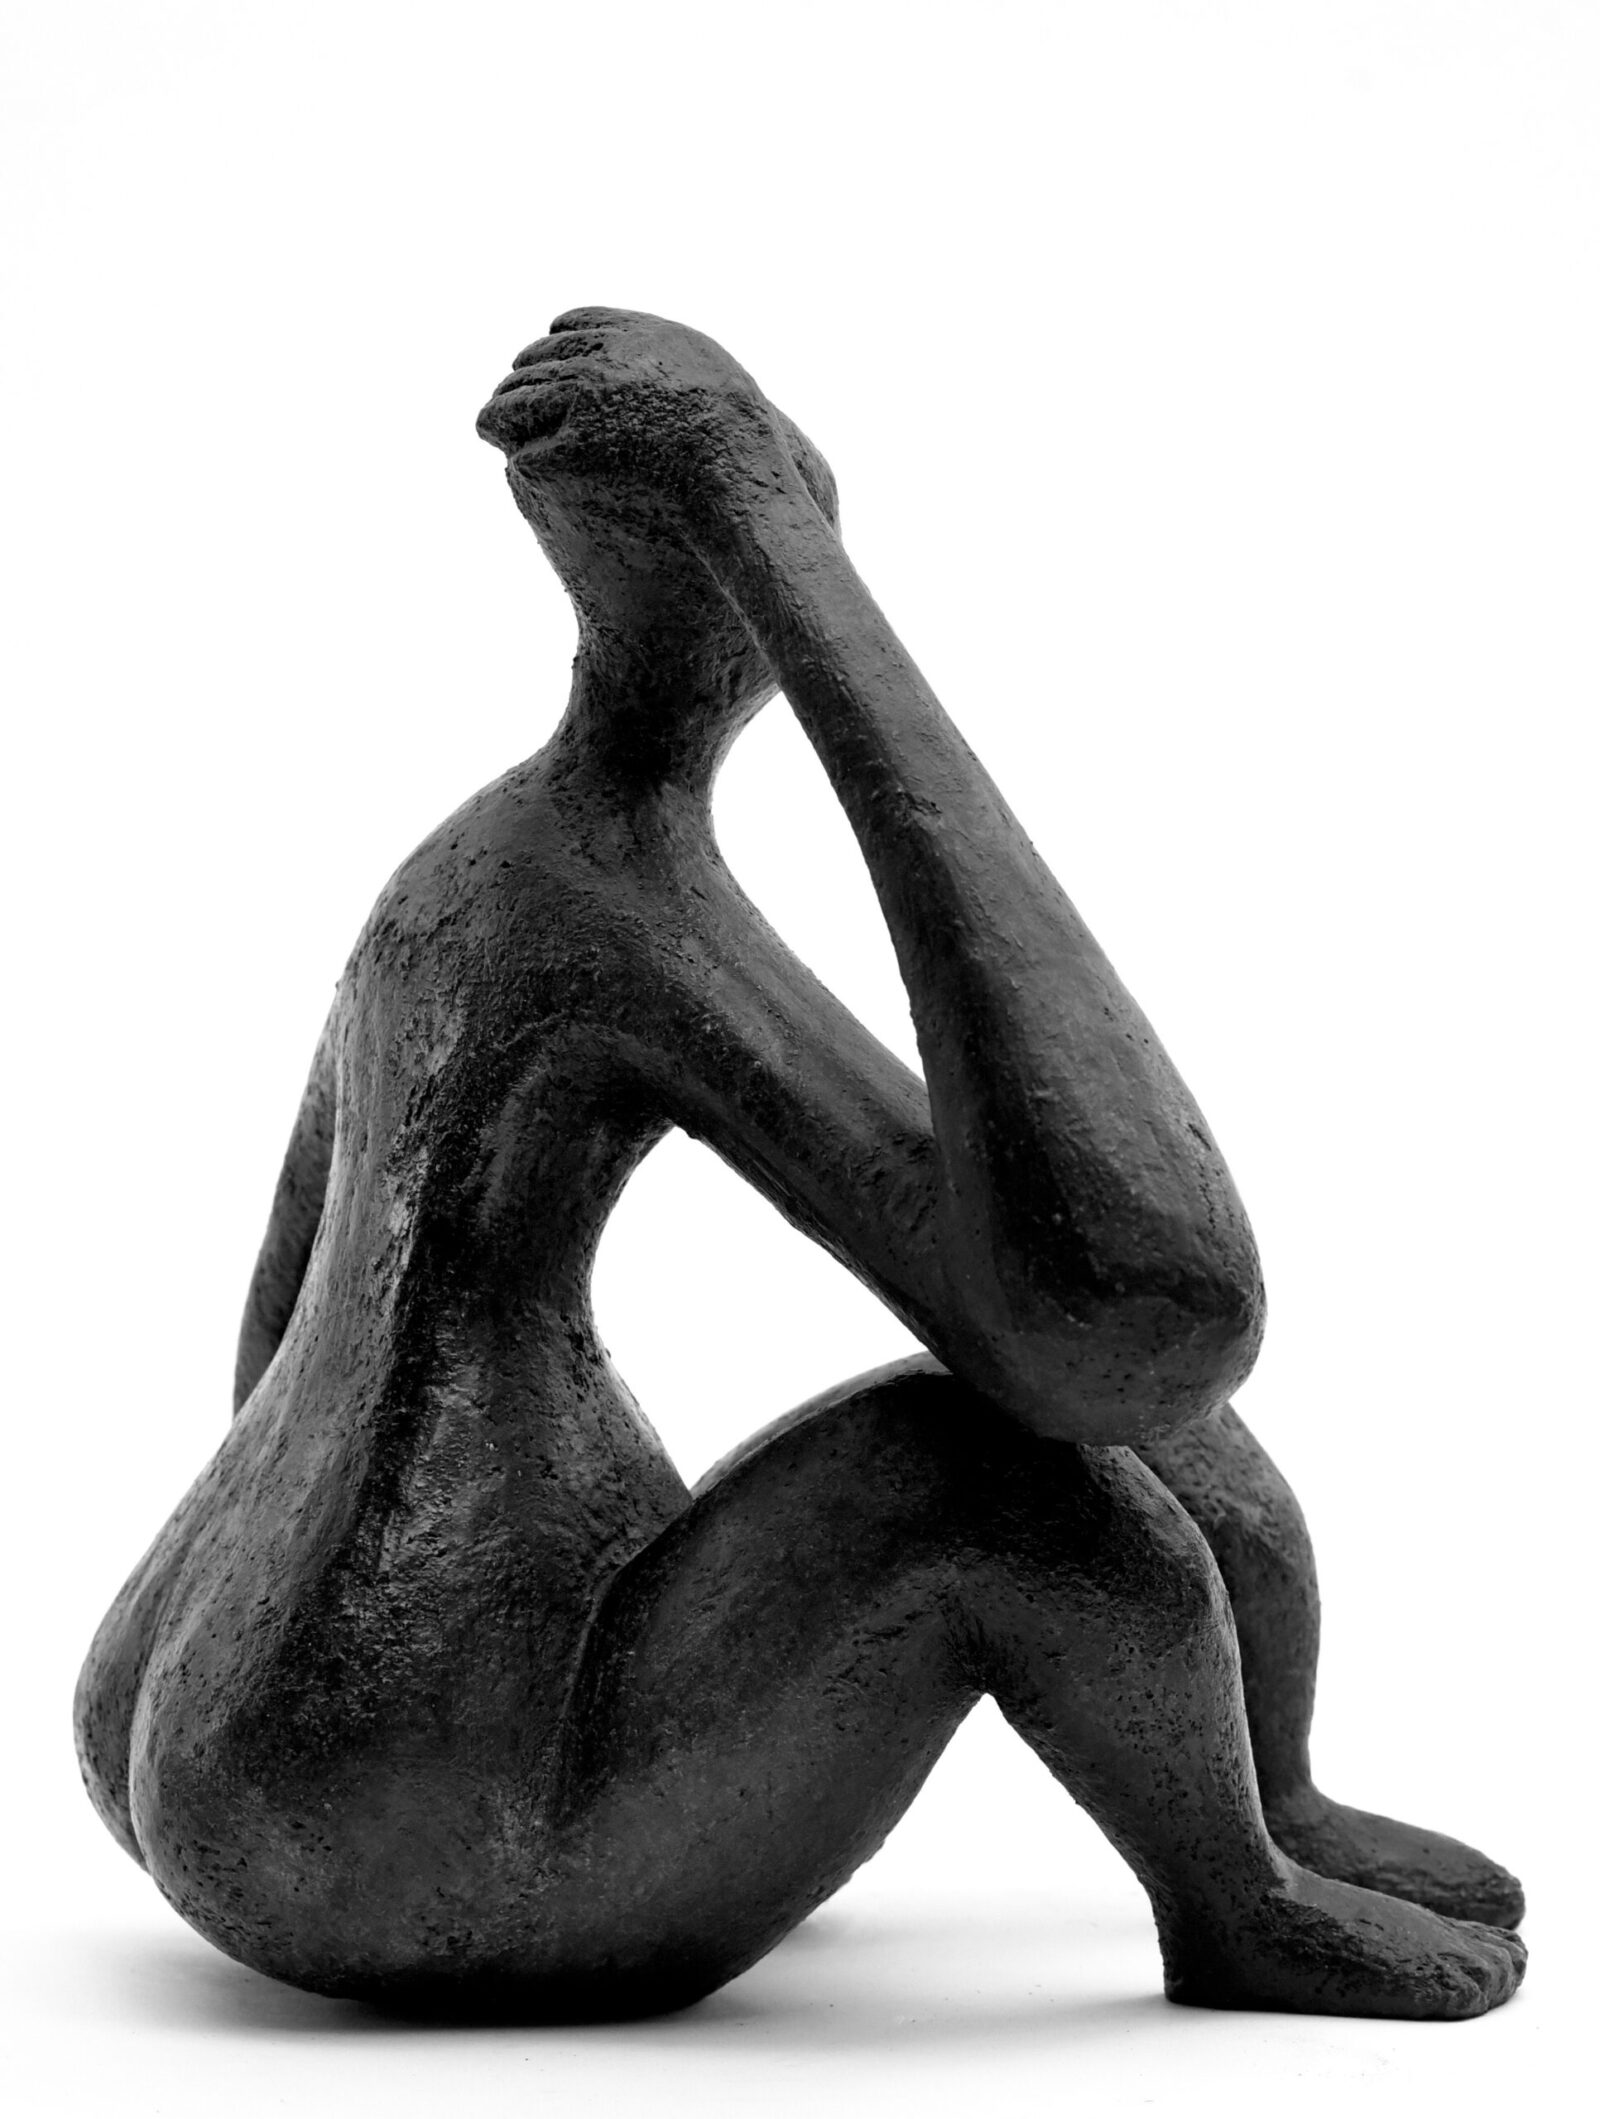 elegant contemporary bronze sculpture of a sitting figure for interior design